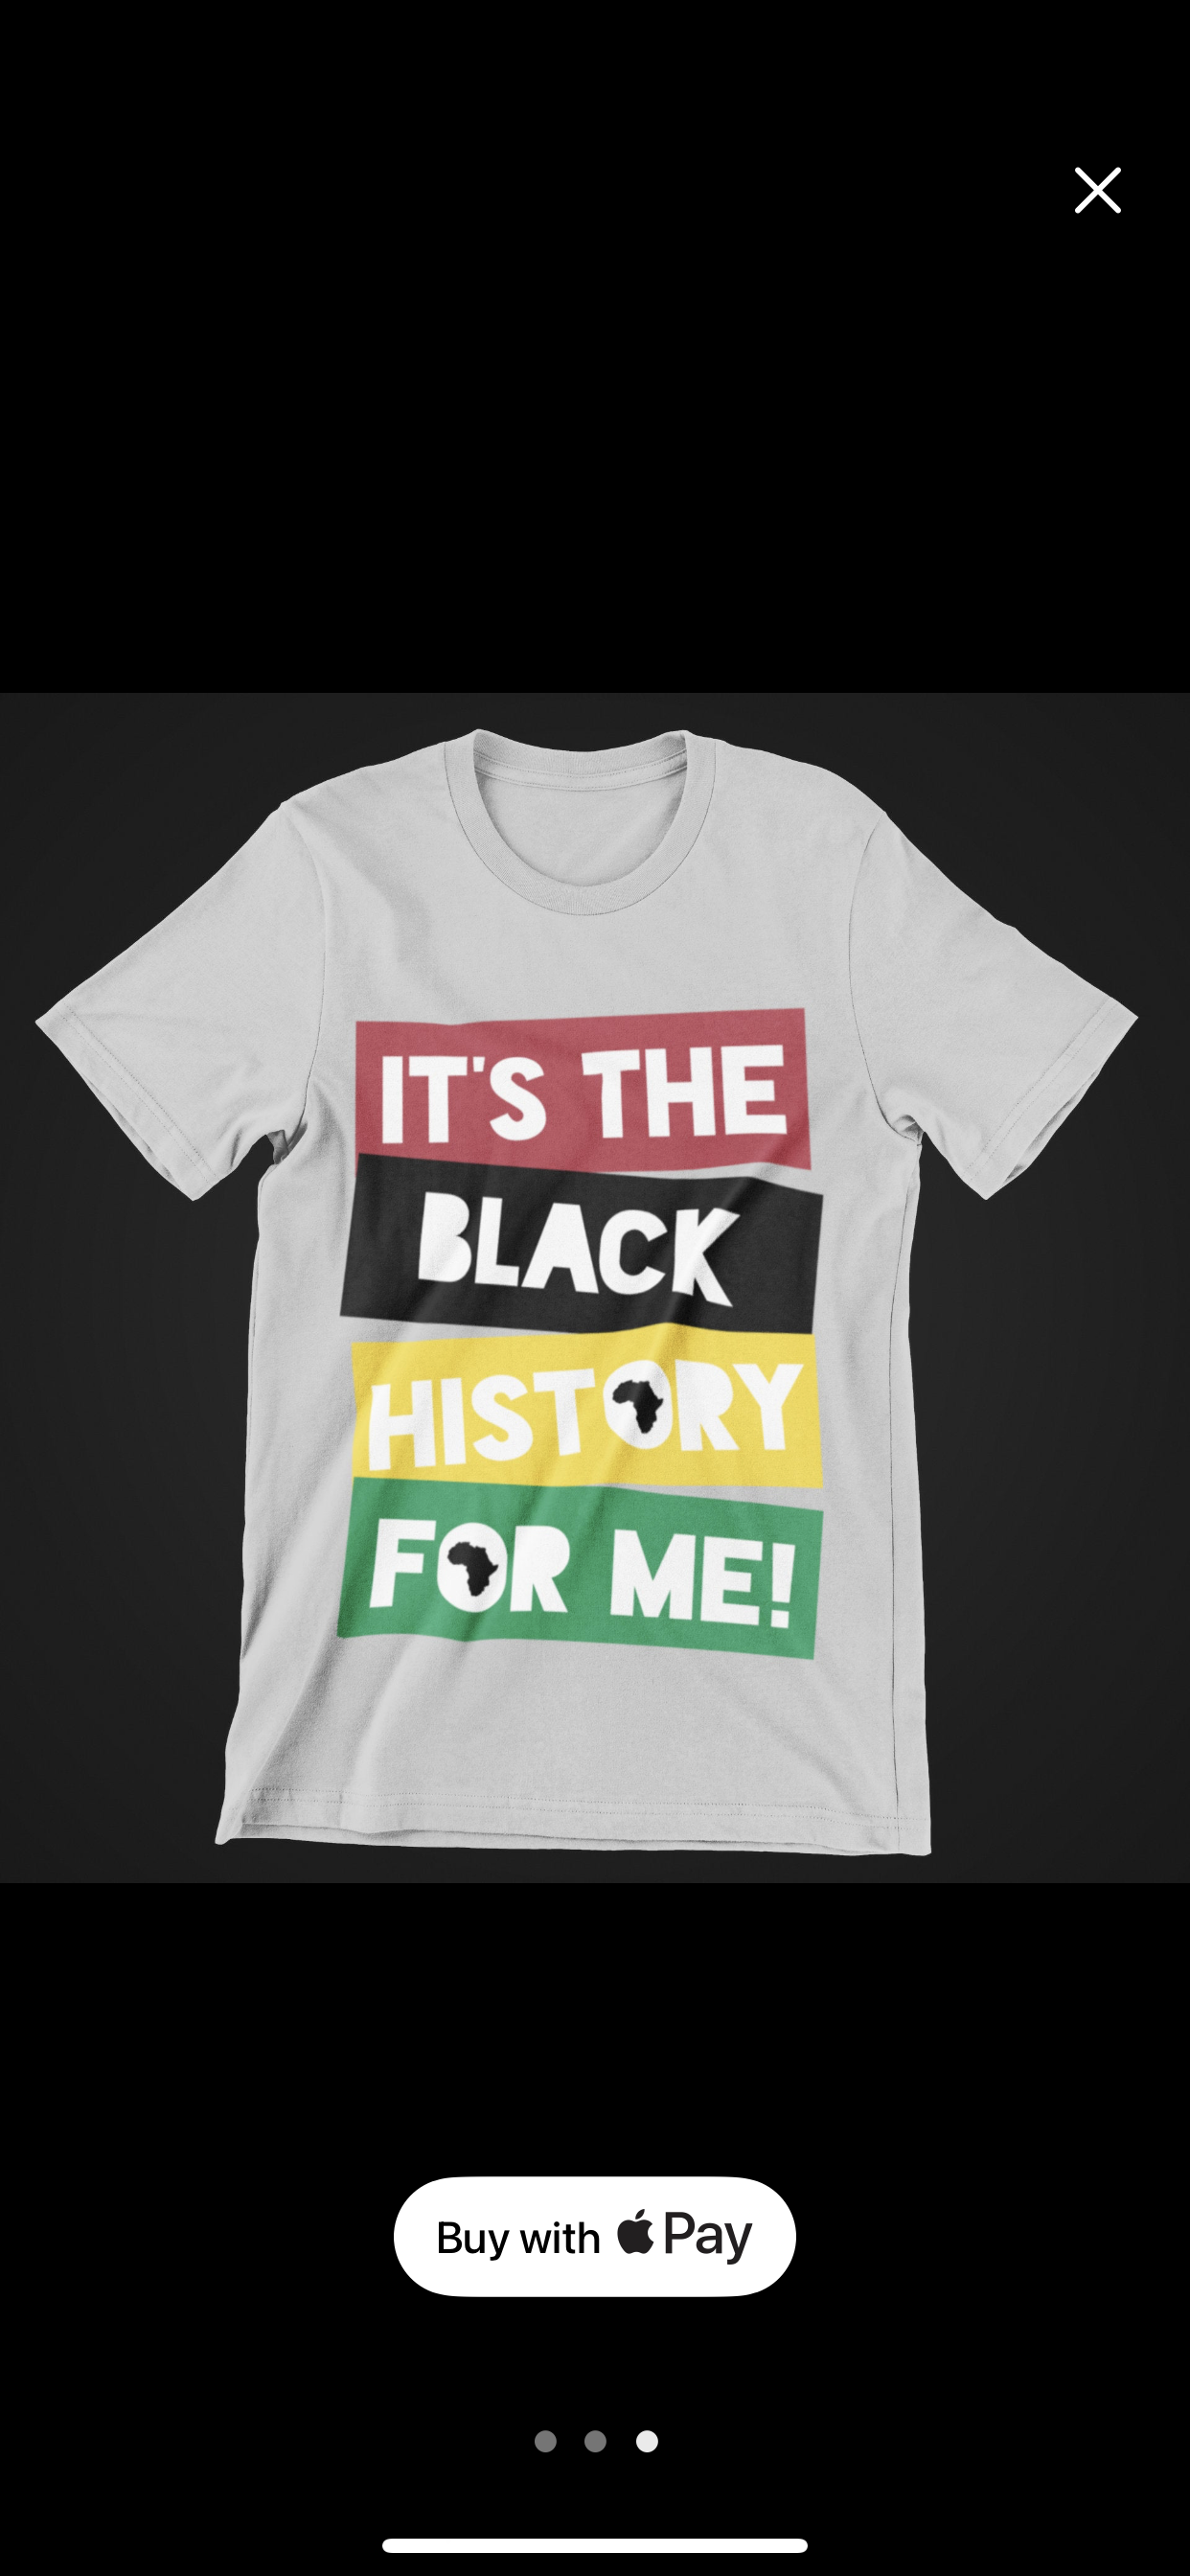 It’s the Black History 4 Me!